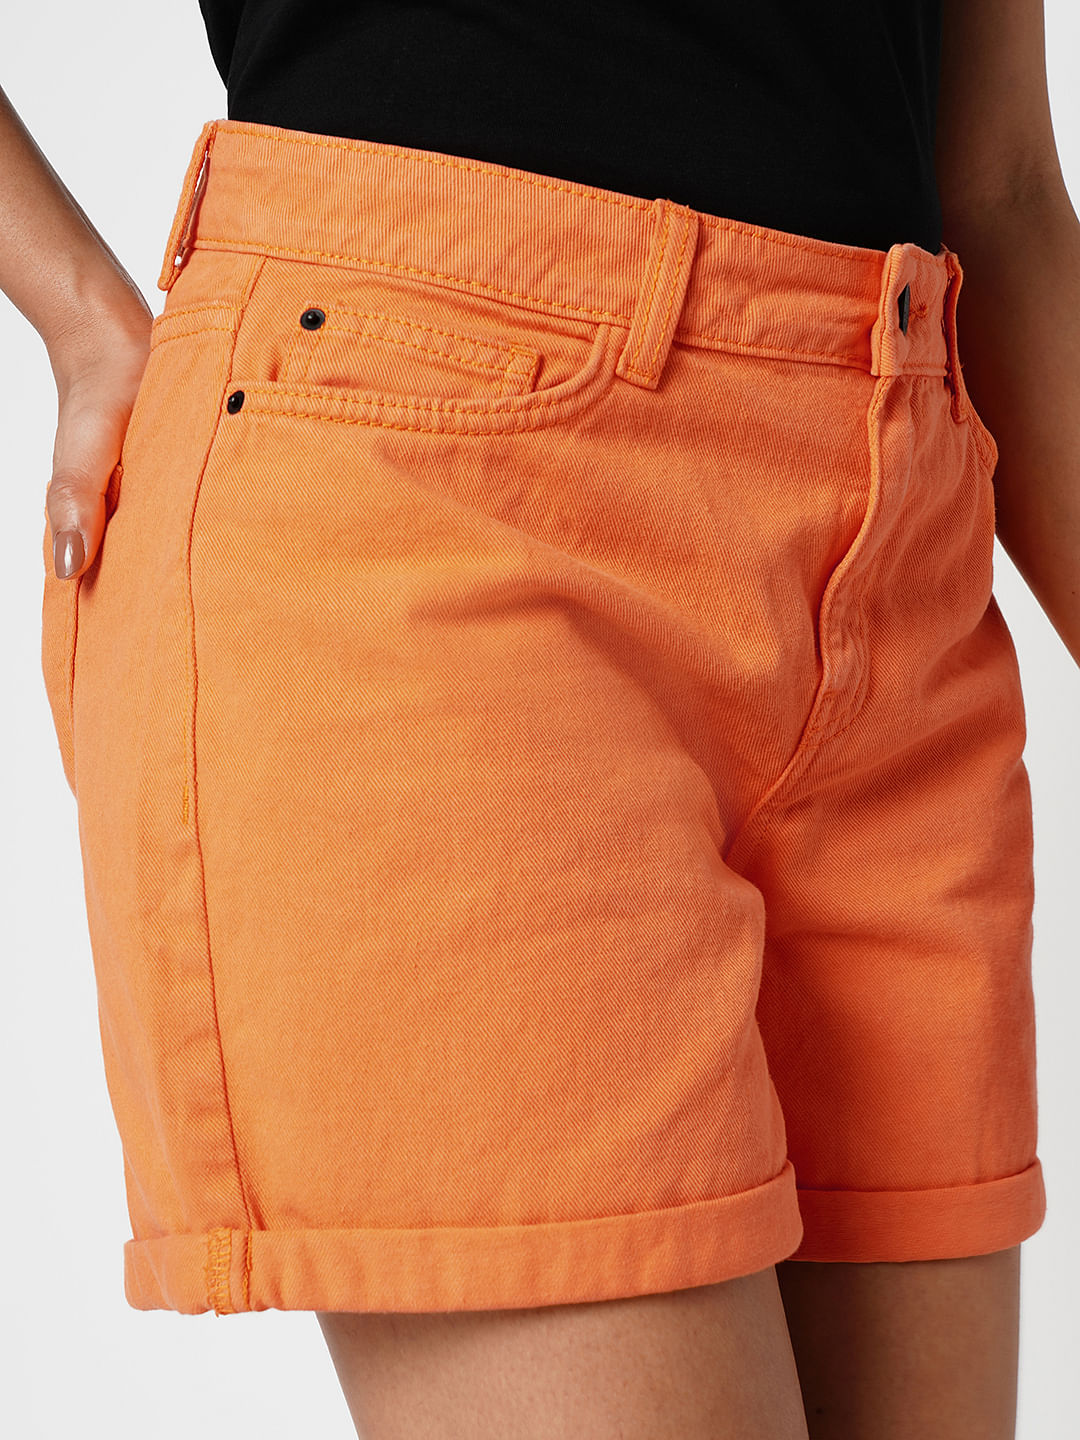 Cross Jeans Denim shorts - orange - Zalando.de